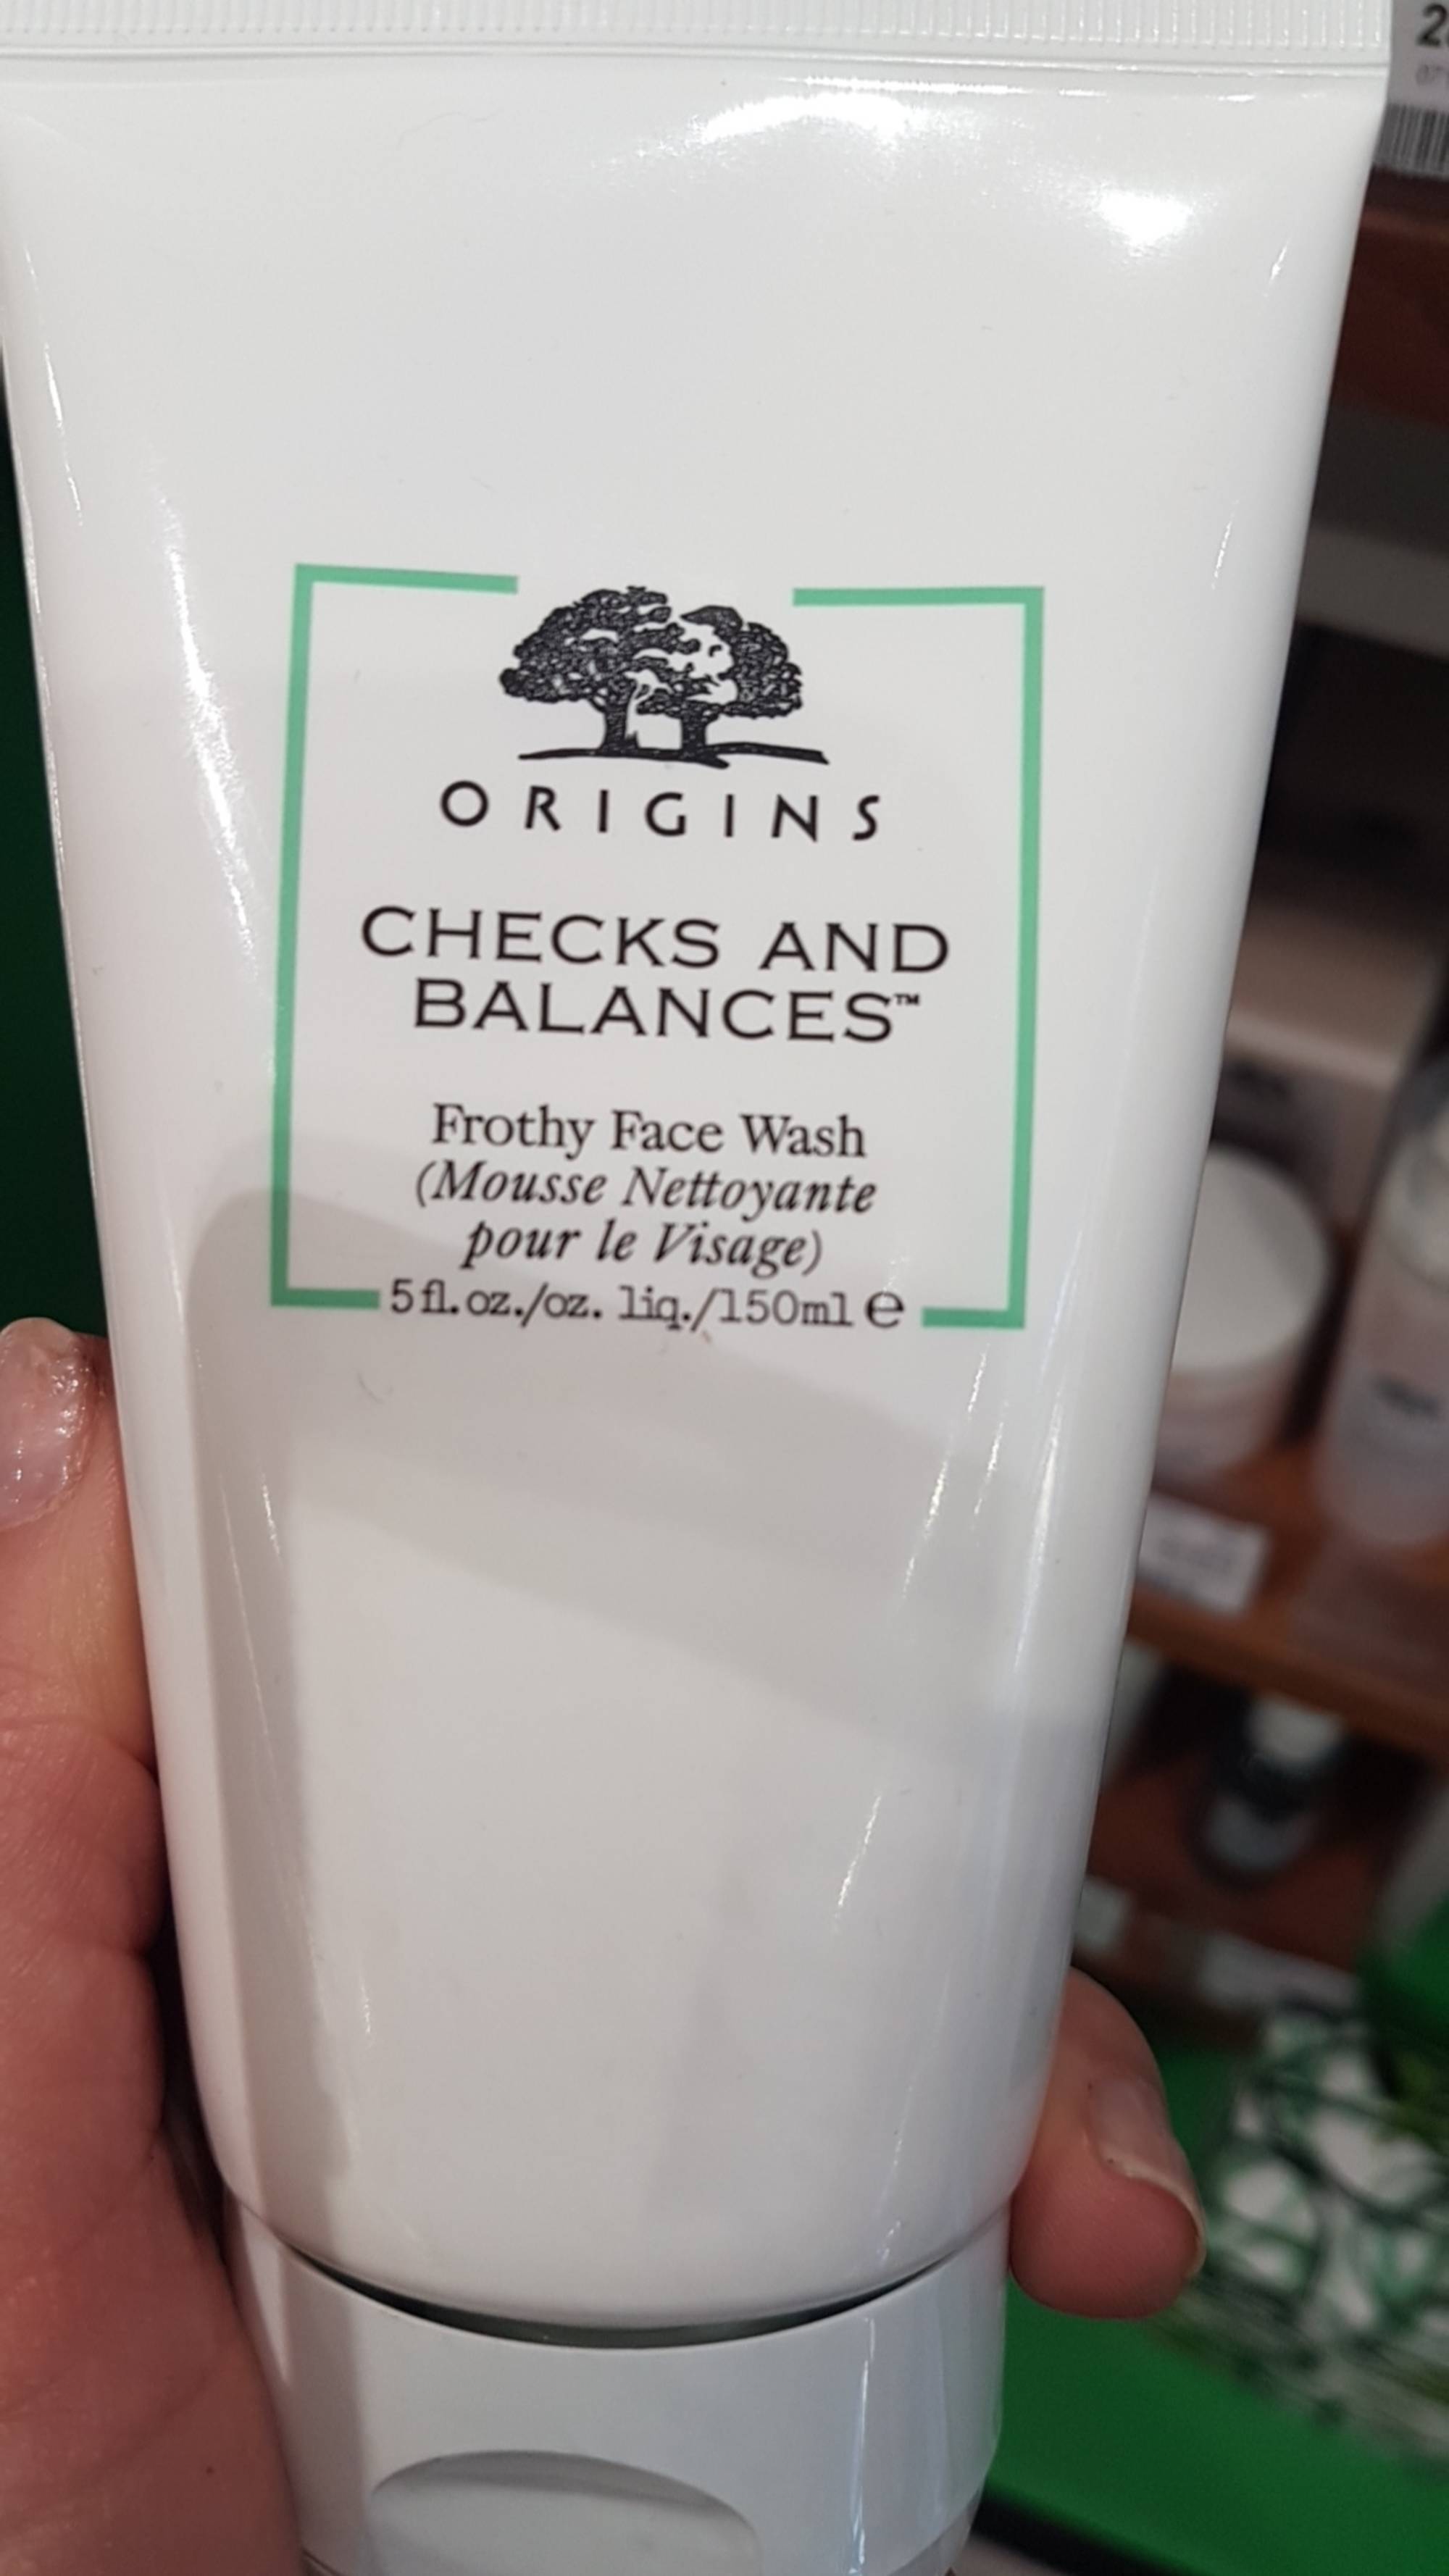 ORIGINS - Checks and balances - Frothy face wash